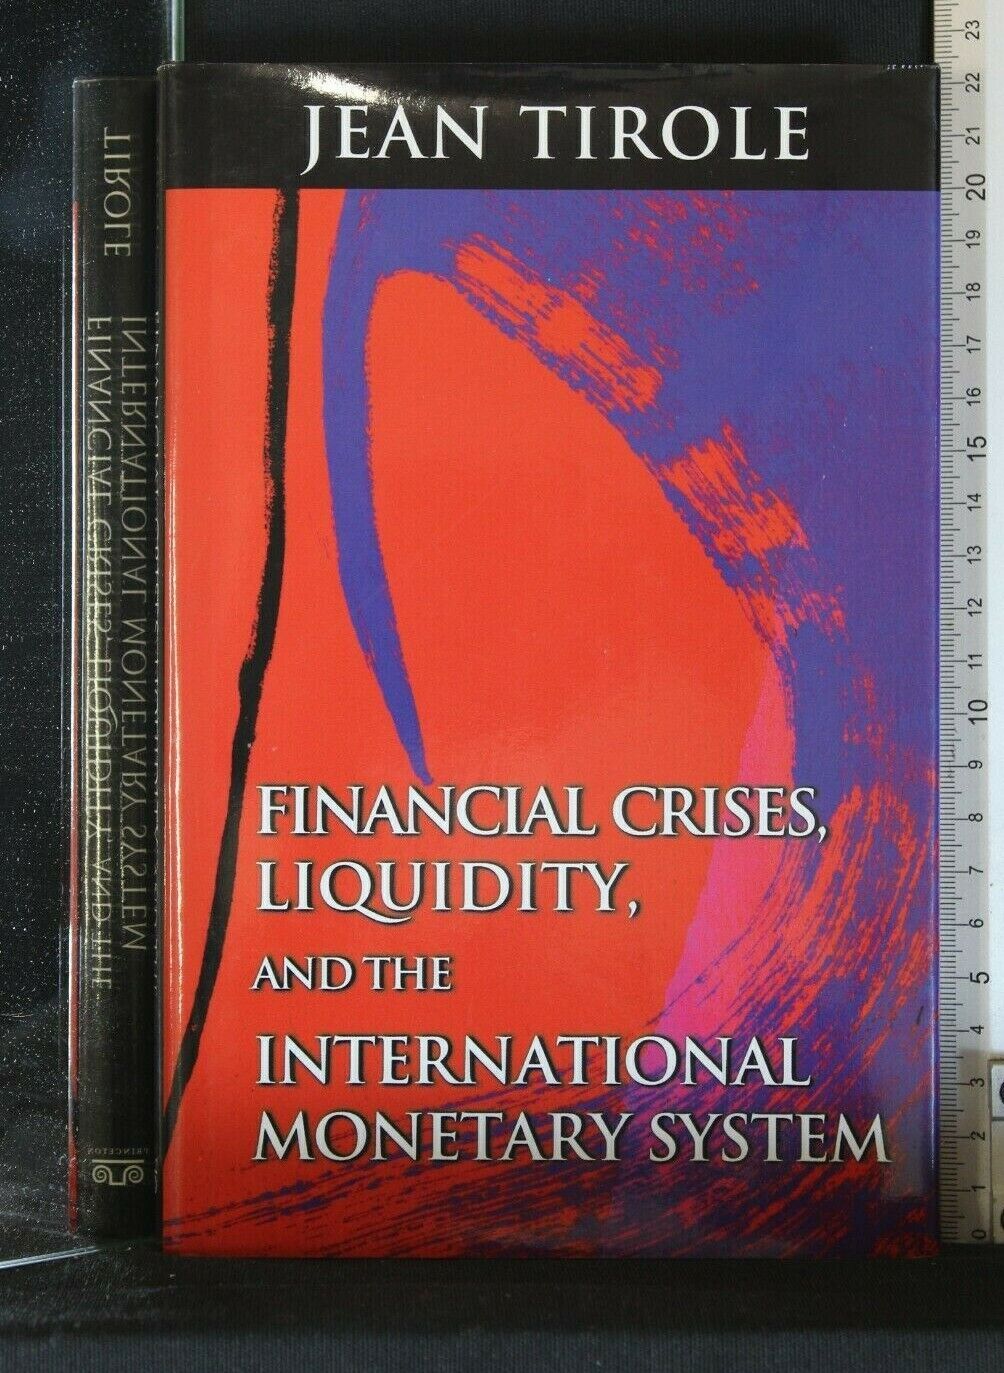 FINANCIAL CRISES AND THE INTERNATIONAL MONETARY SUSTEM